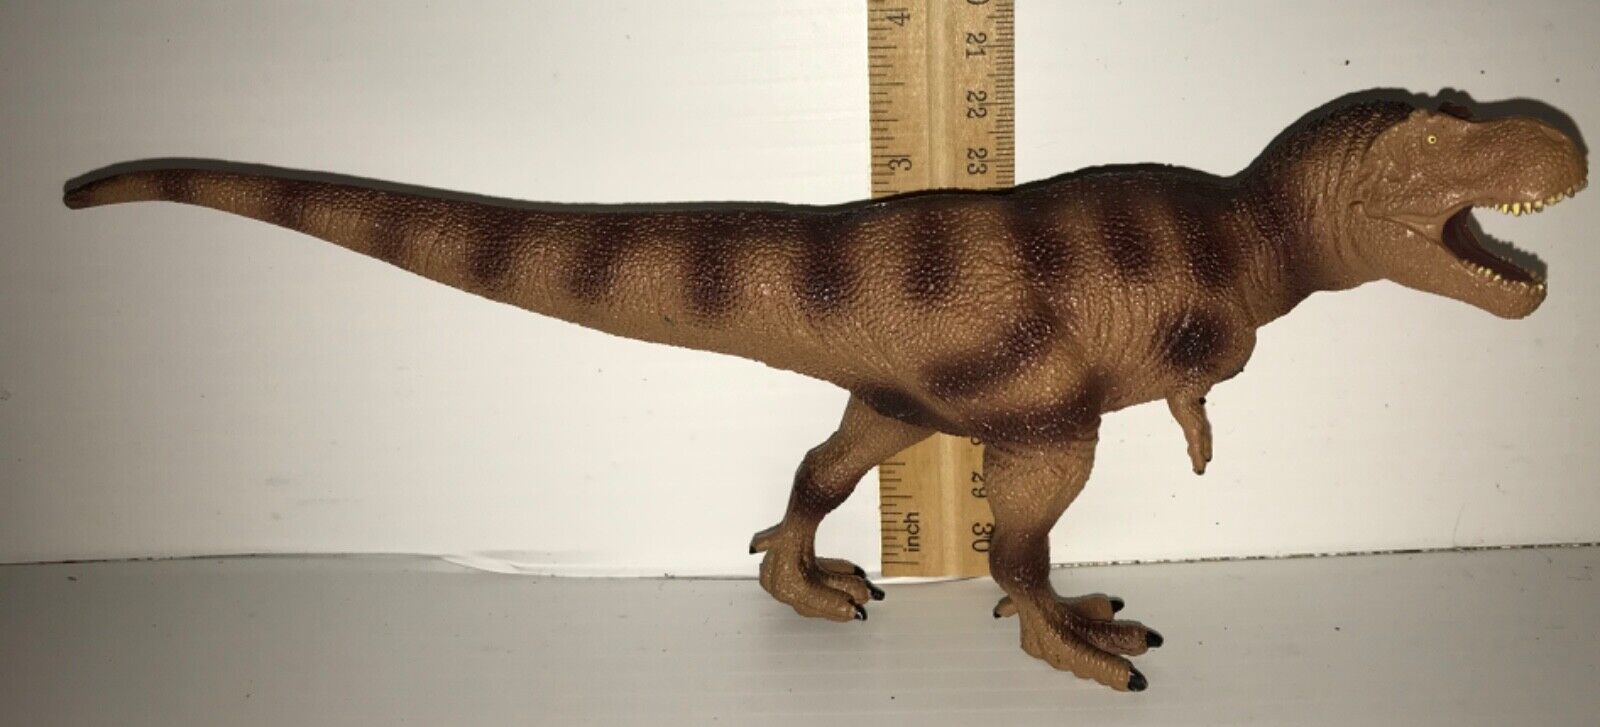 Favorite co. Tyrannosaurus Rex figure, discontinued model